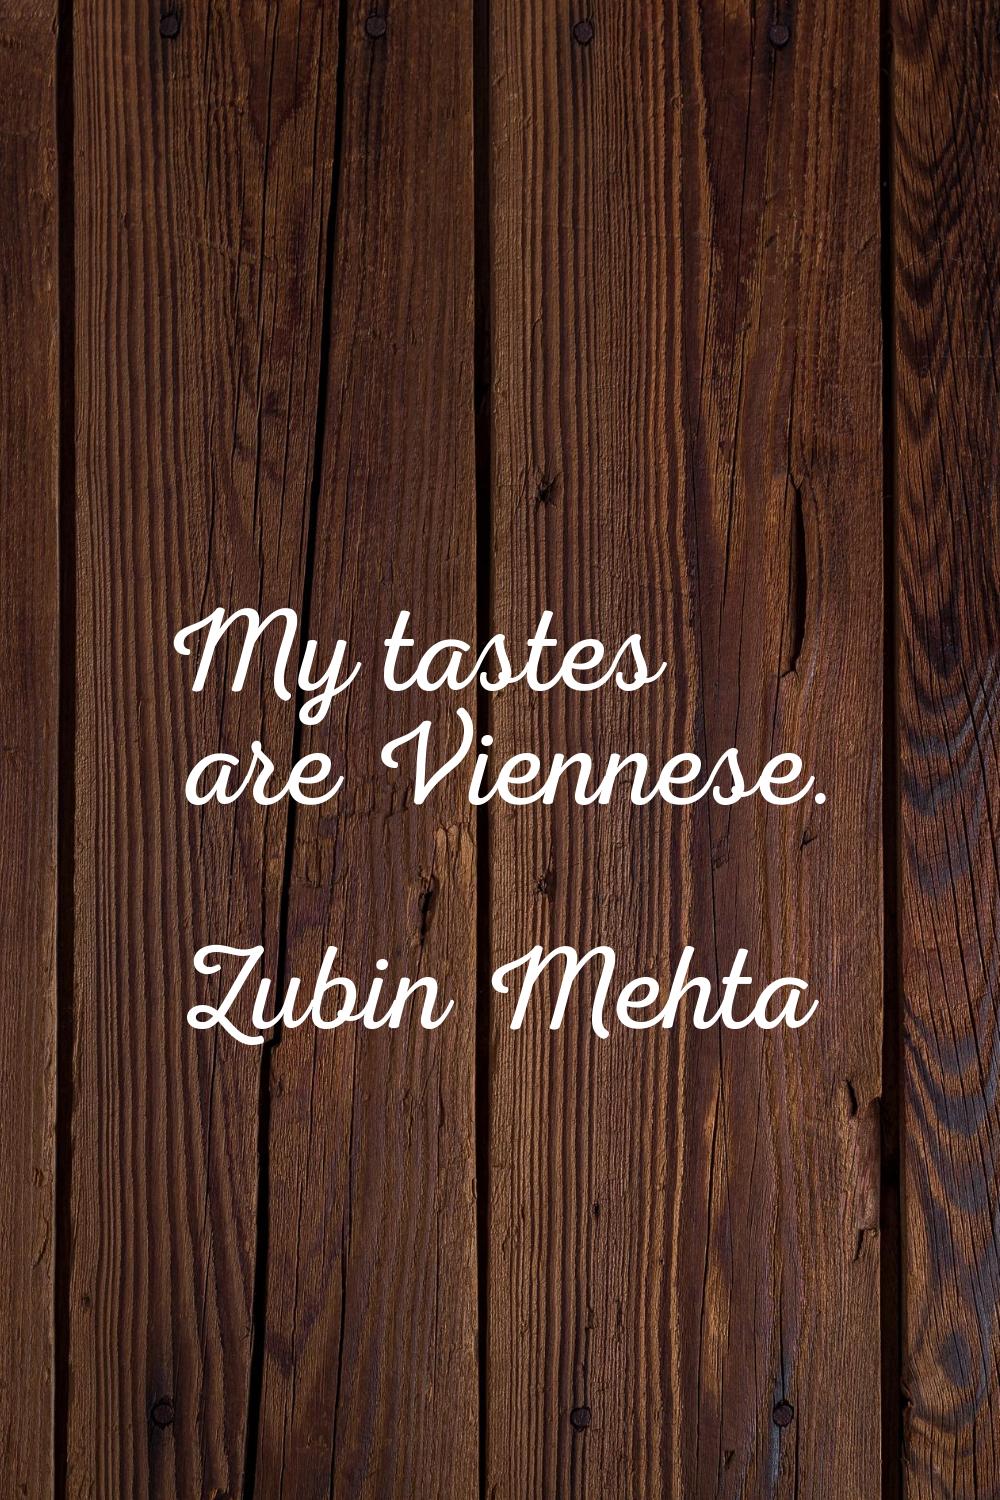 My tastes are Viennese.